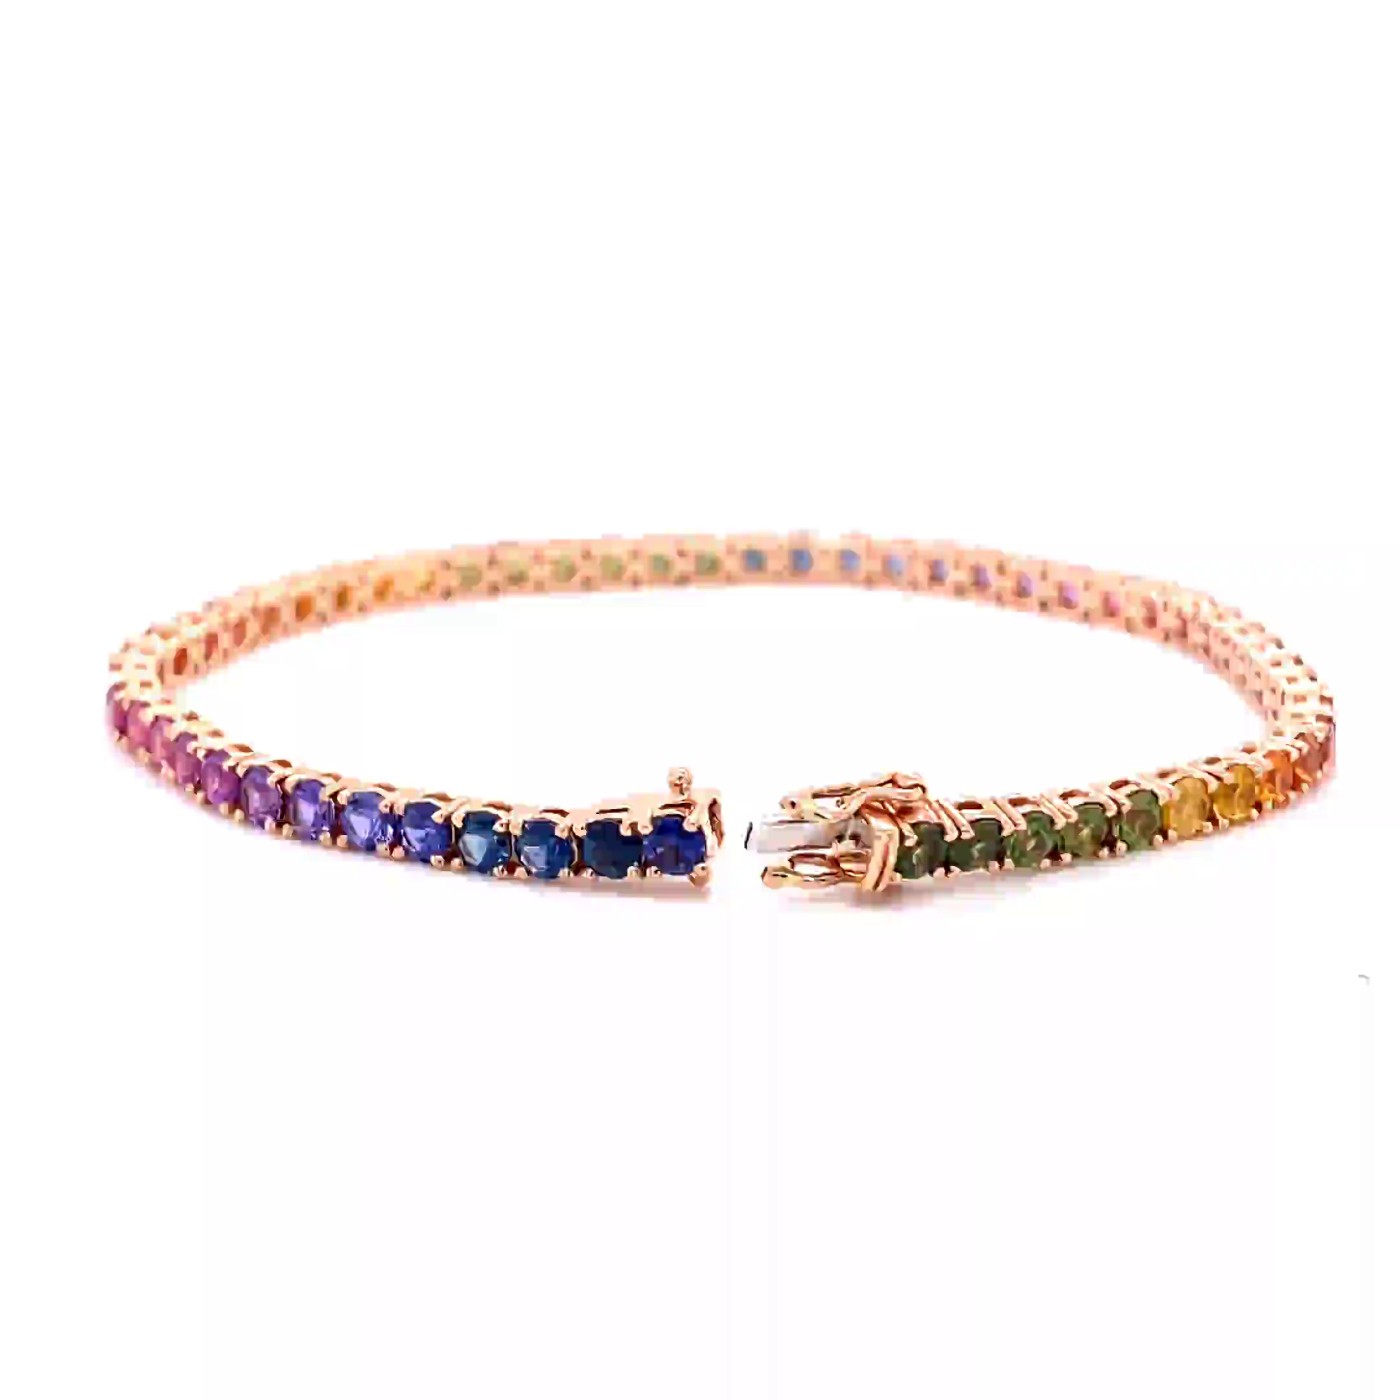 18k white gold diamond cut rainbow sapphire riviere tennis bracelet set with 5.74 ct sapphire Photos & images